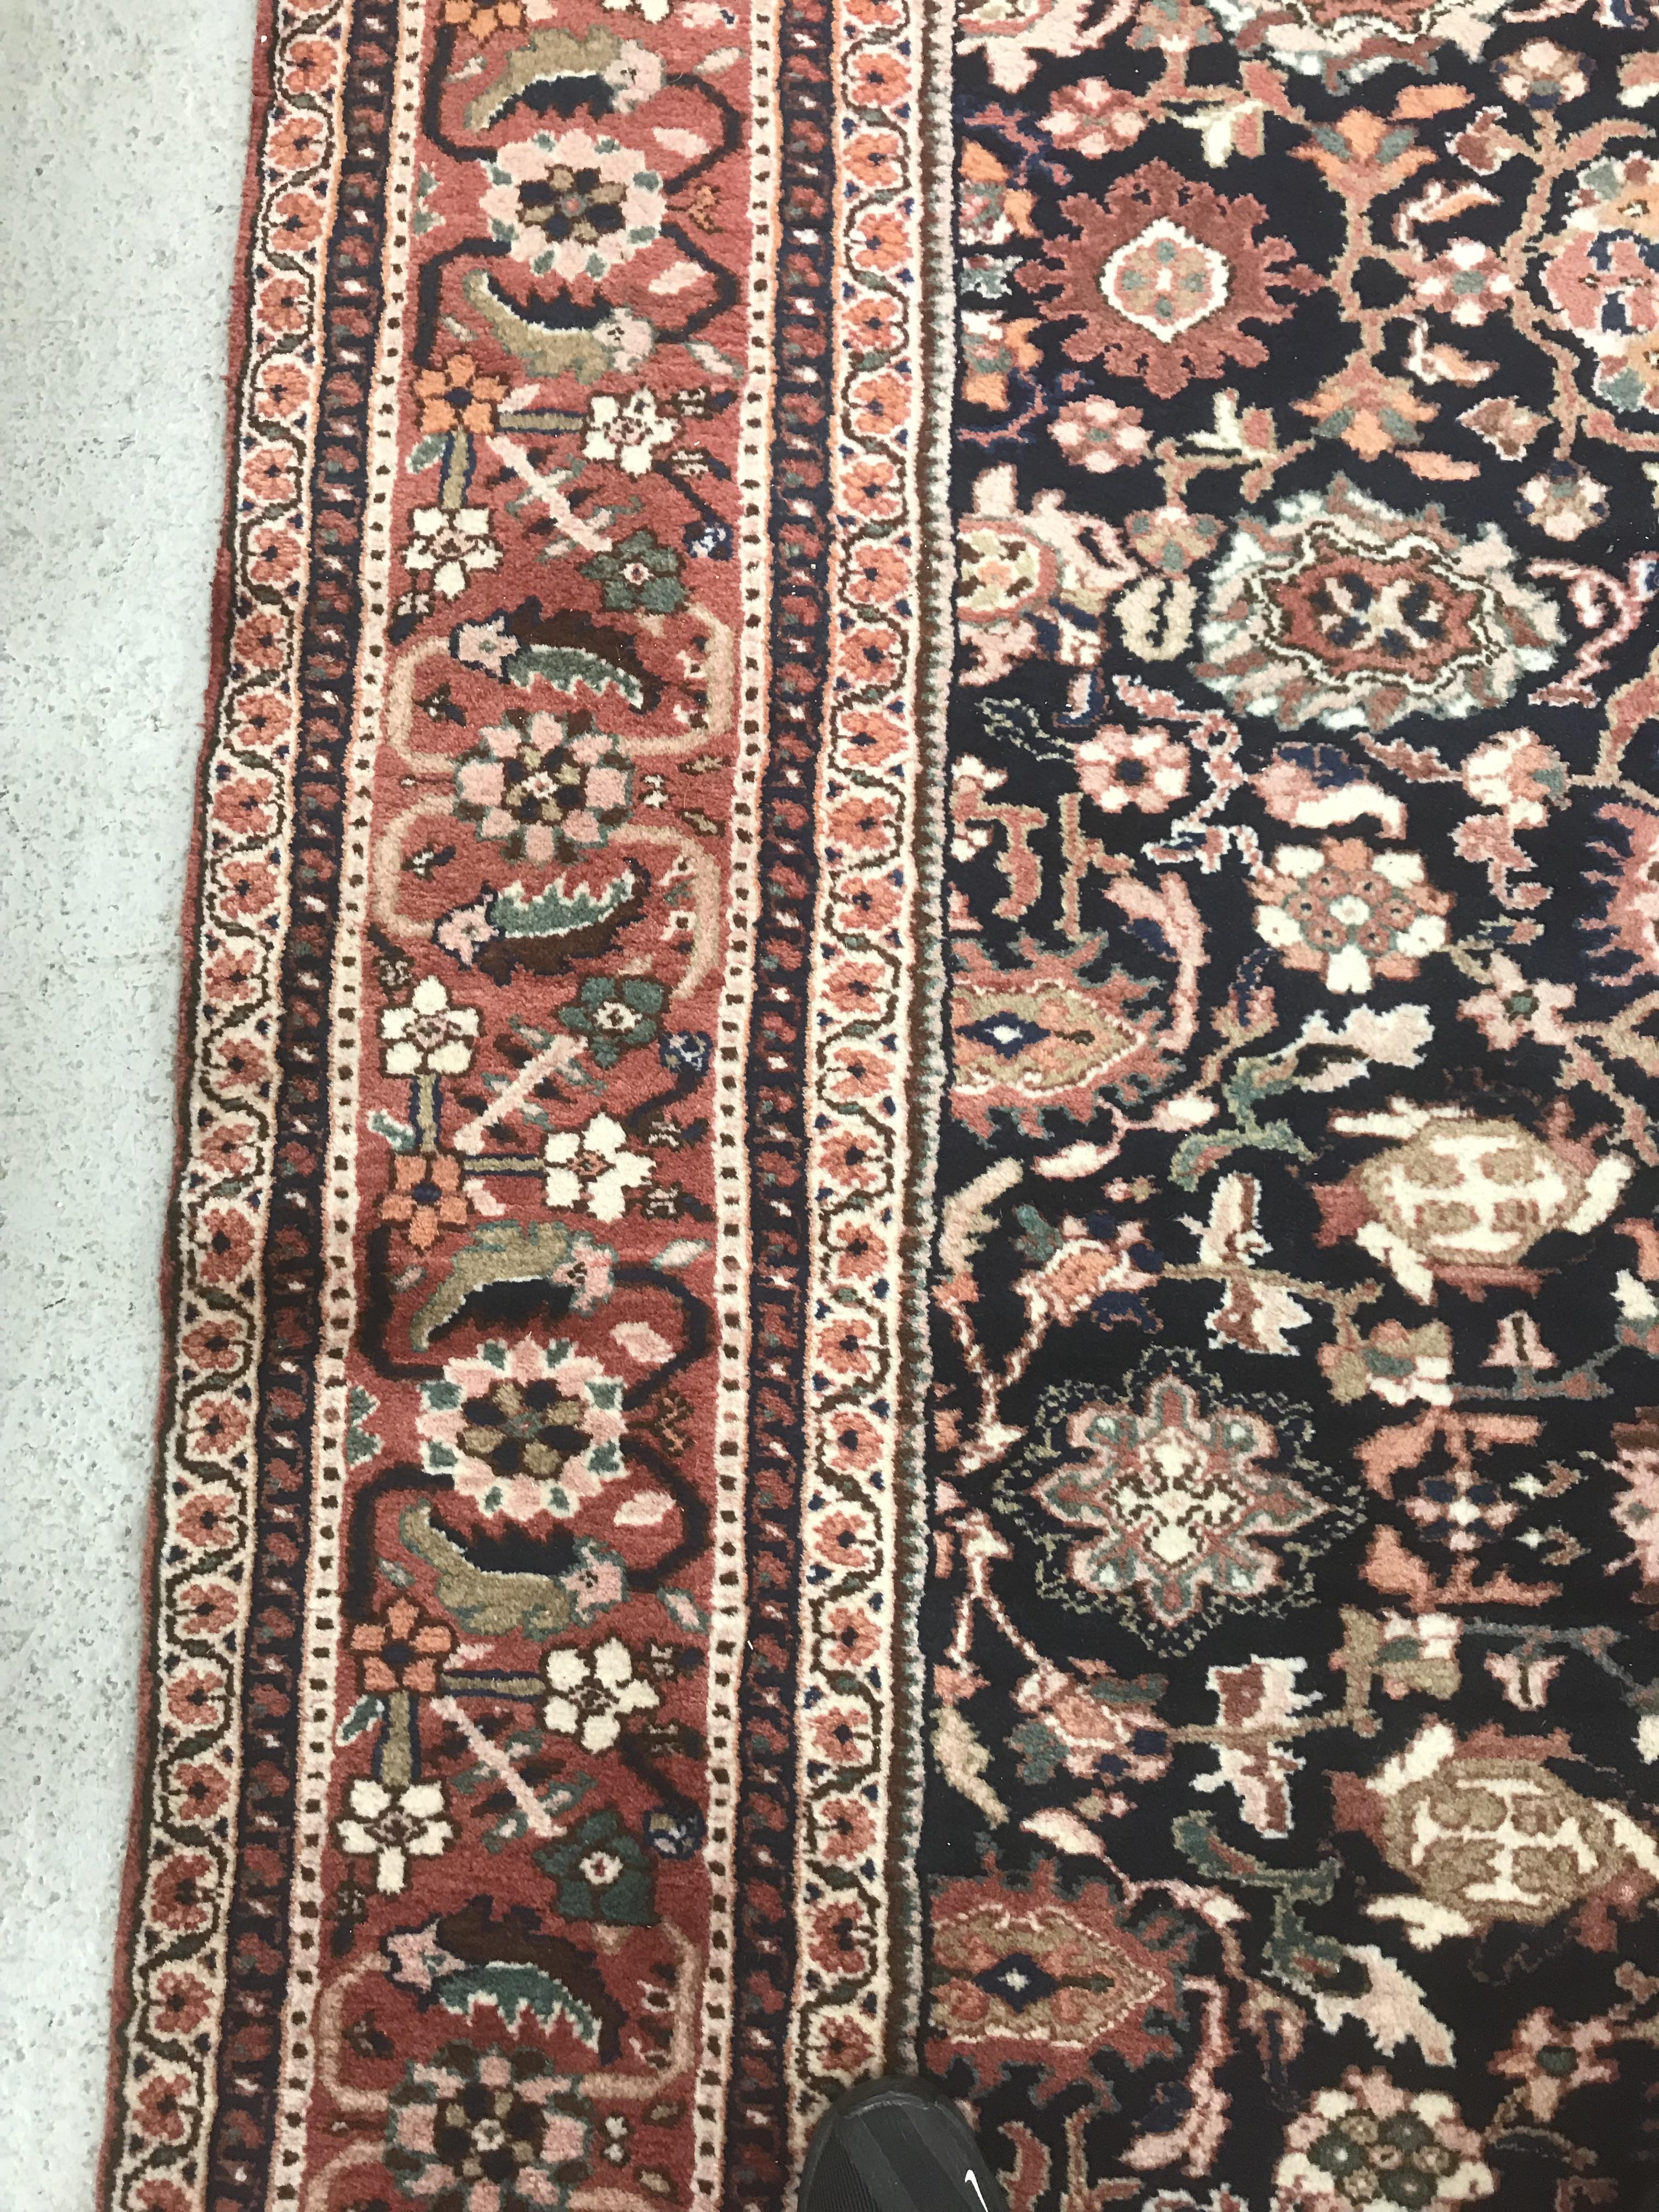 A 20th Century Afghan Kazak carpet, - Image 9 of 36